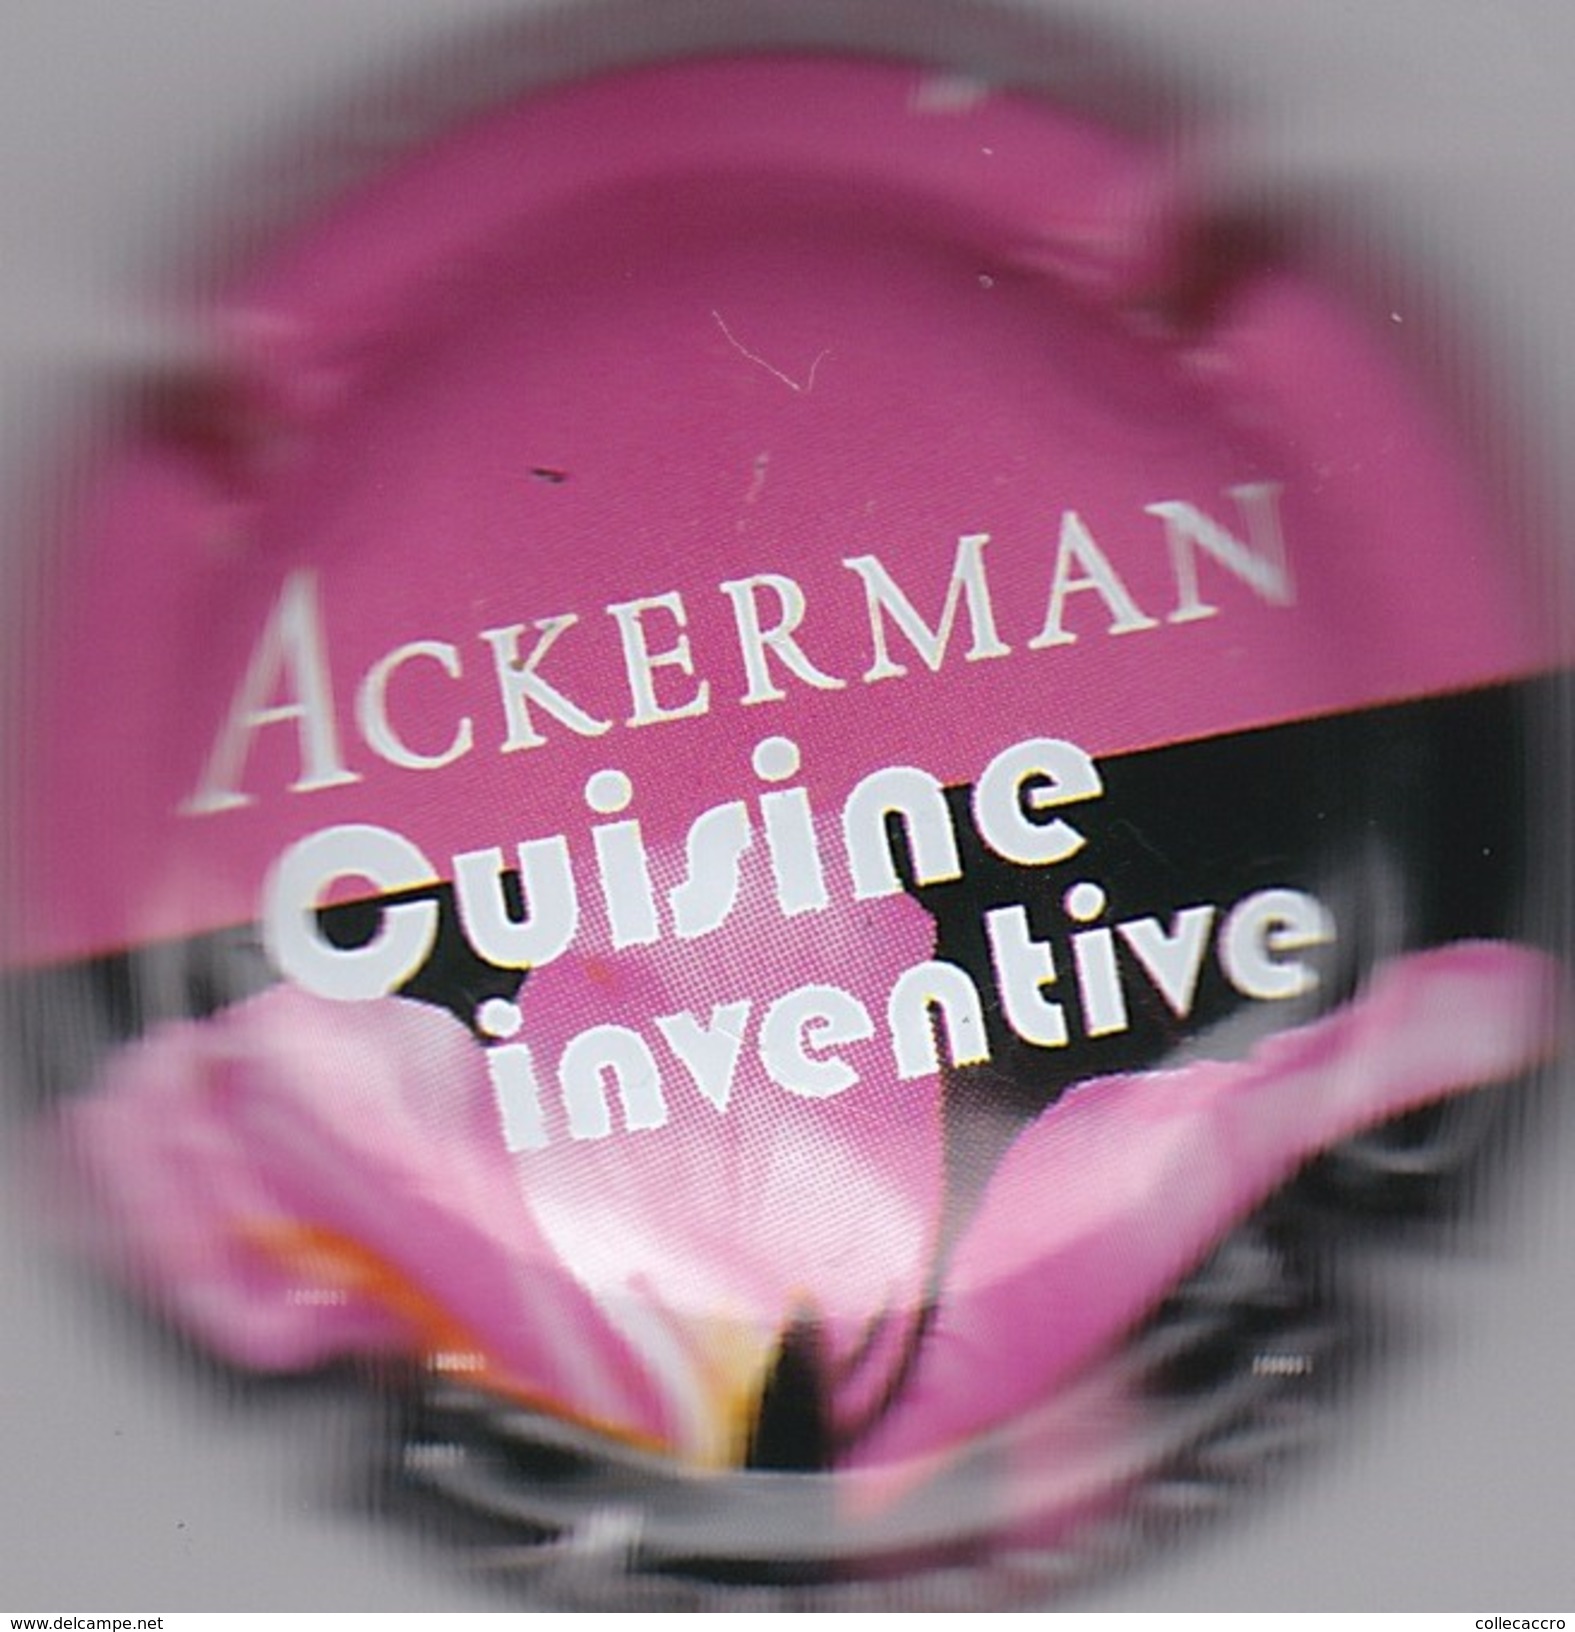 ACKERMAN CUISINE INVENTIVE - Sparkling Wine